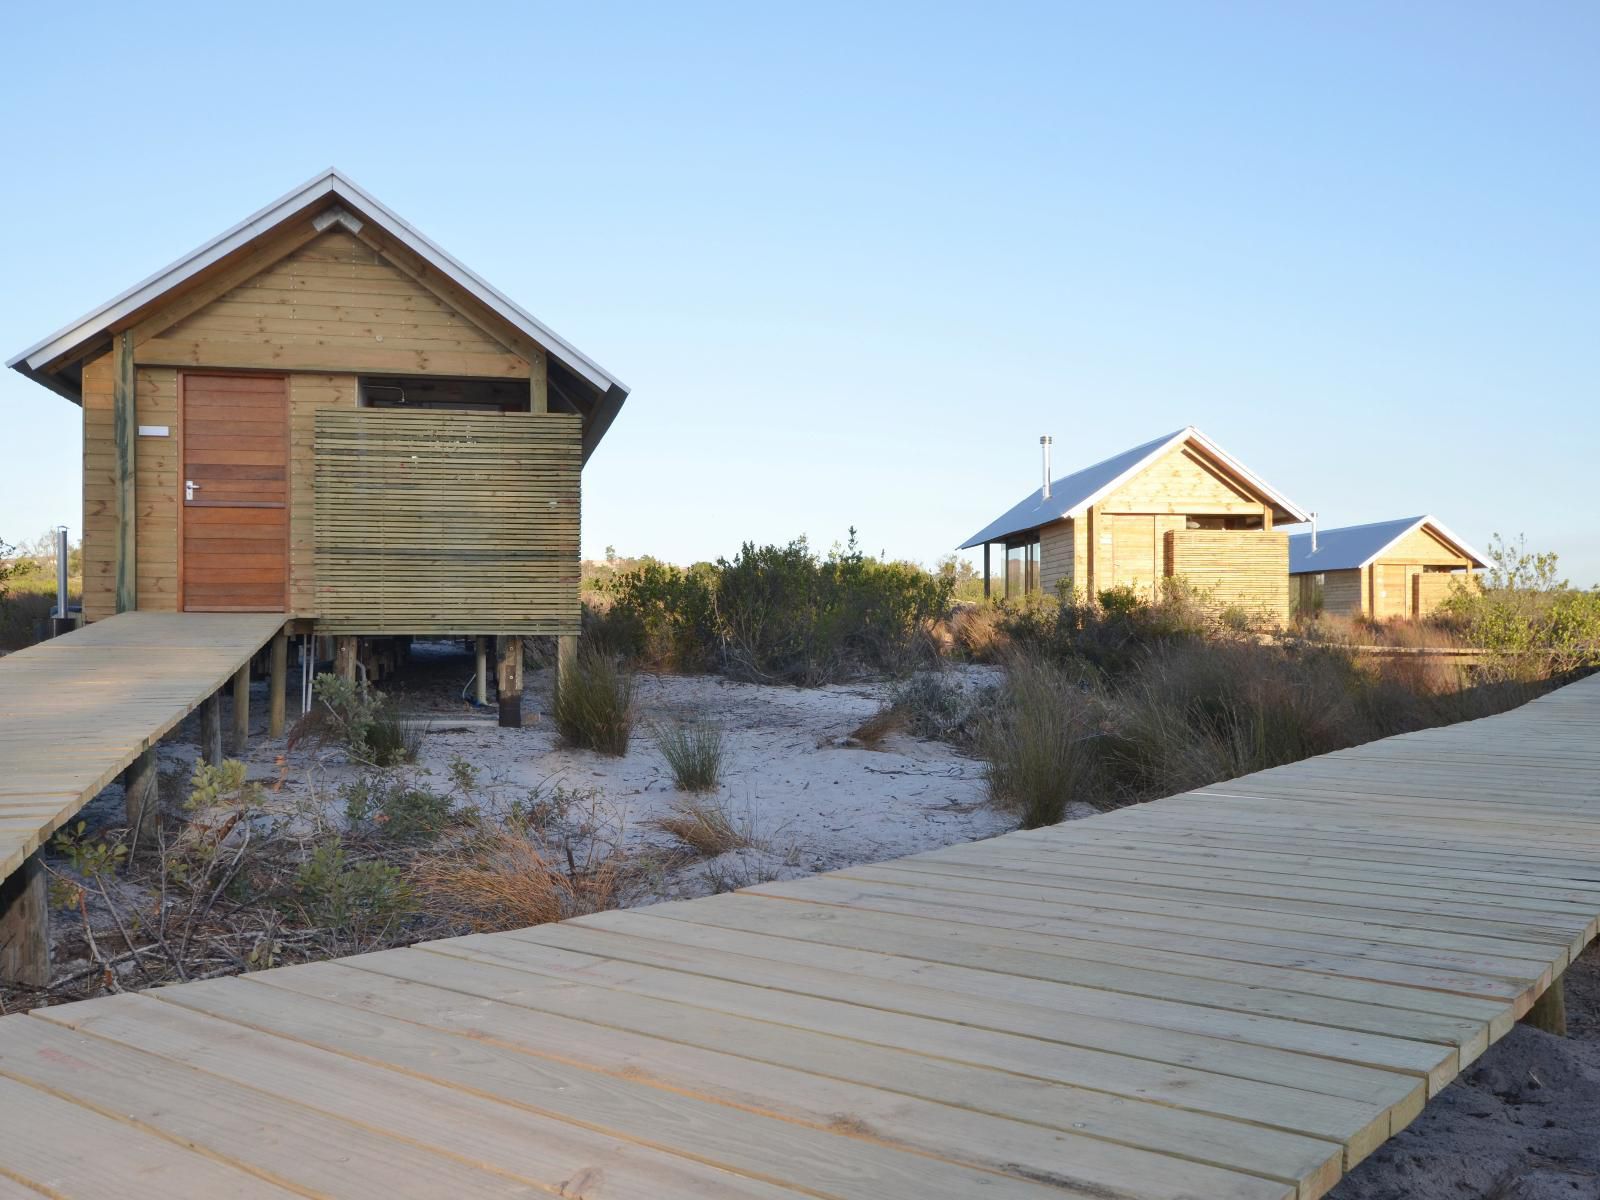 Khwa Ttu Jakkalsfontein Western Cape South Africa Beach, Nature, Sand, Building, Architecture